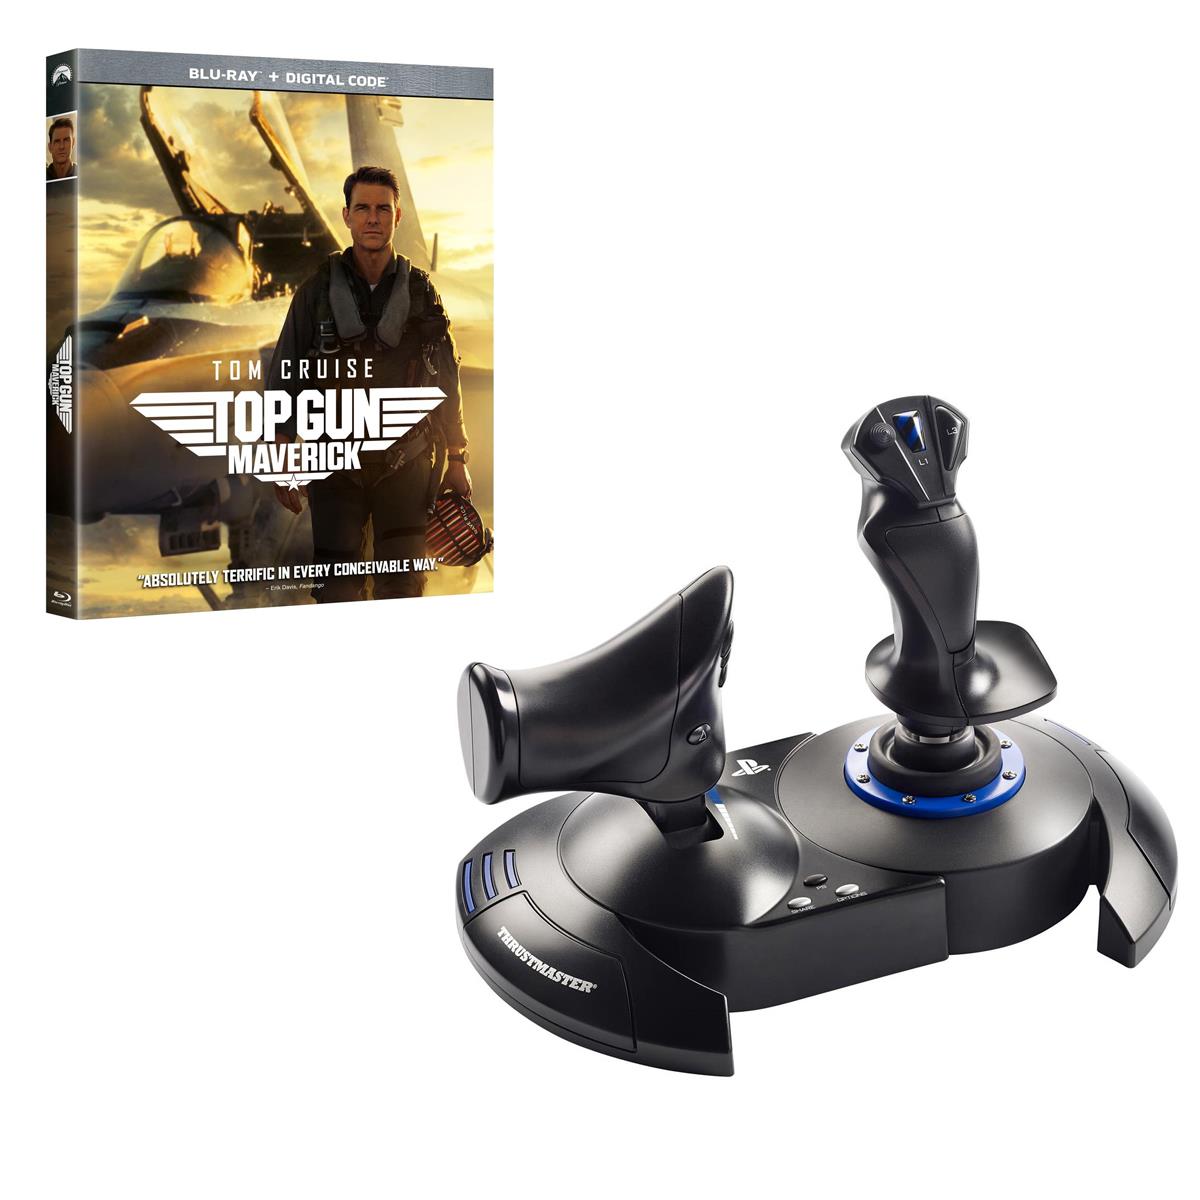 Bitterhed Efterforskning handicappet Thrustmaster T.Flight HOTAS 4 Stick for PS4/PC w/ Top Gun: Maverick  (Blu-ray)